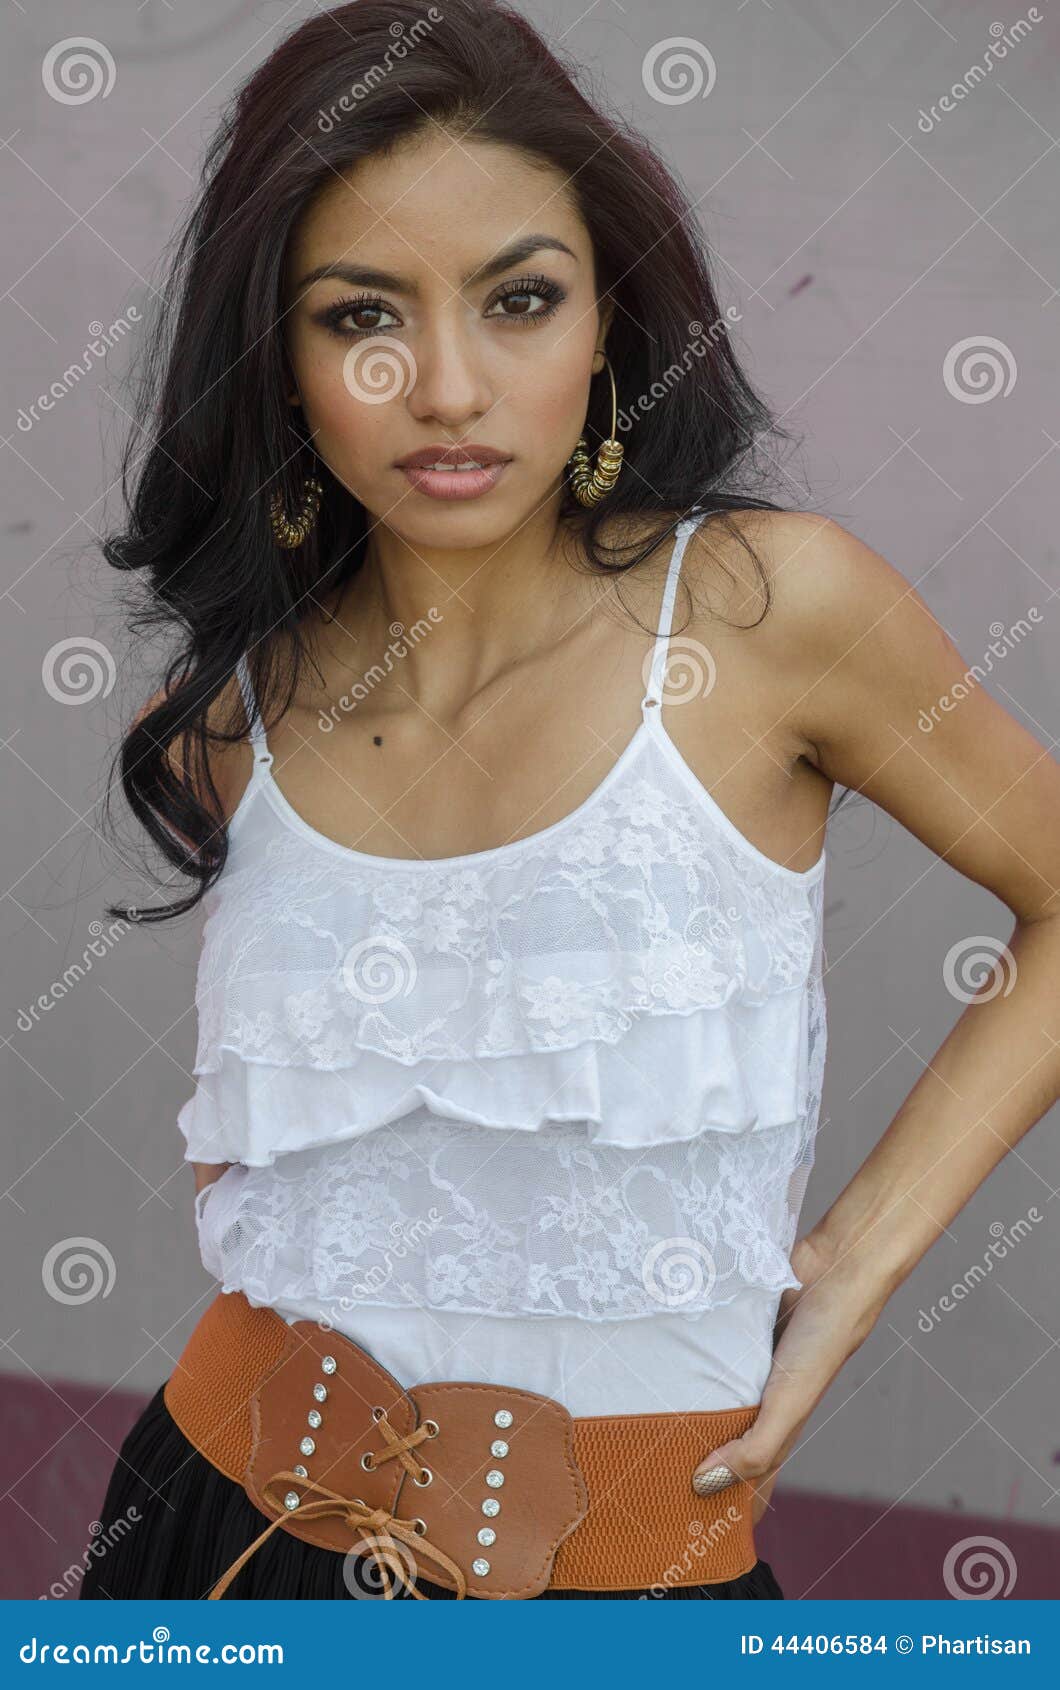 https://thumbs.dreamstime.com/z/beautiful-young-latina-woman-exotic-dark-looks-44406584.jpg